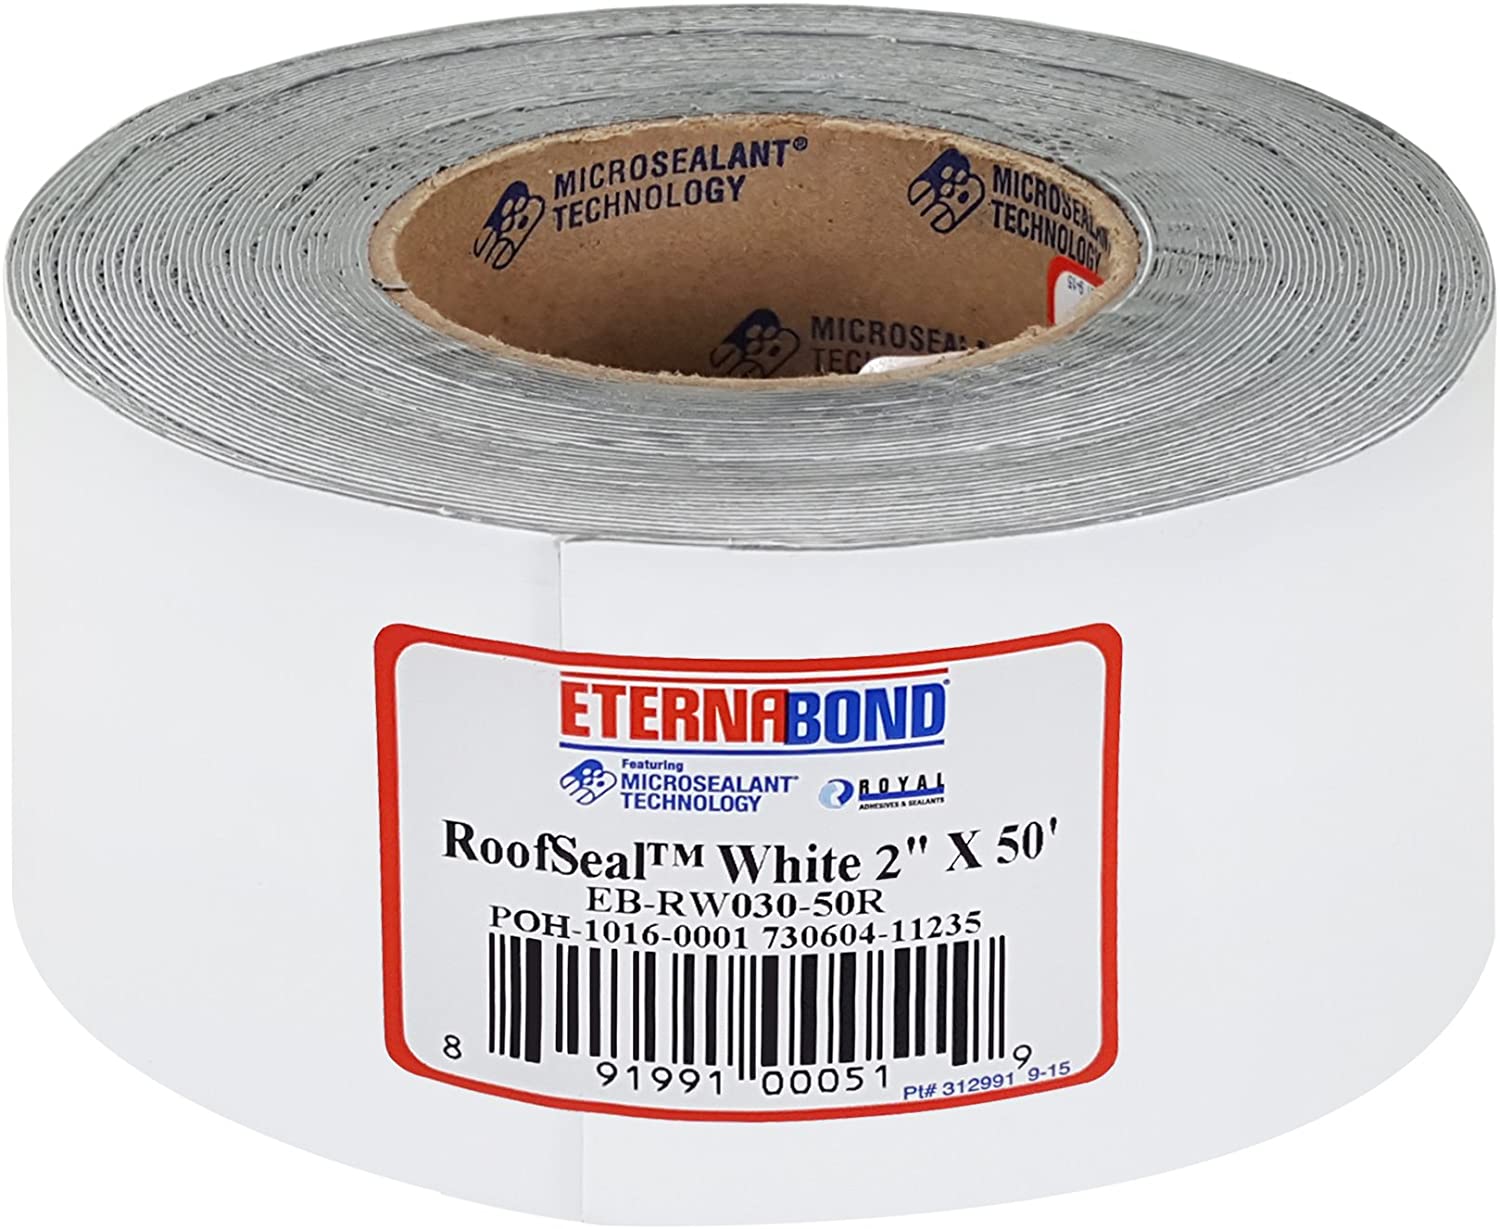 Eternabond roof seal tape, white, 2